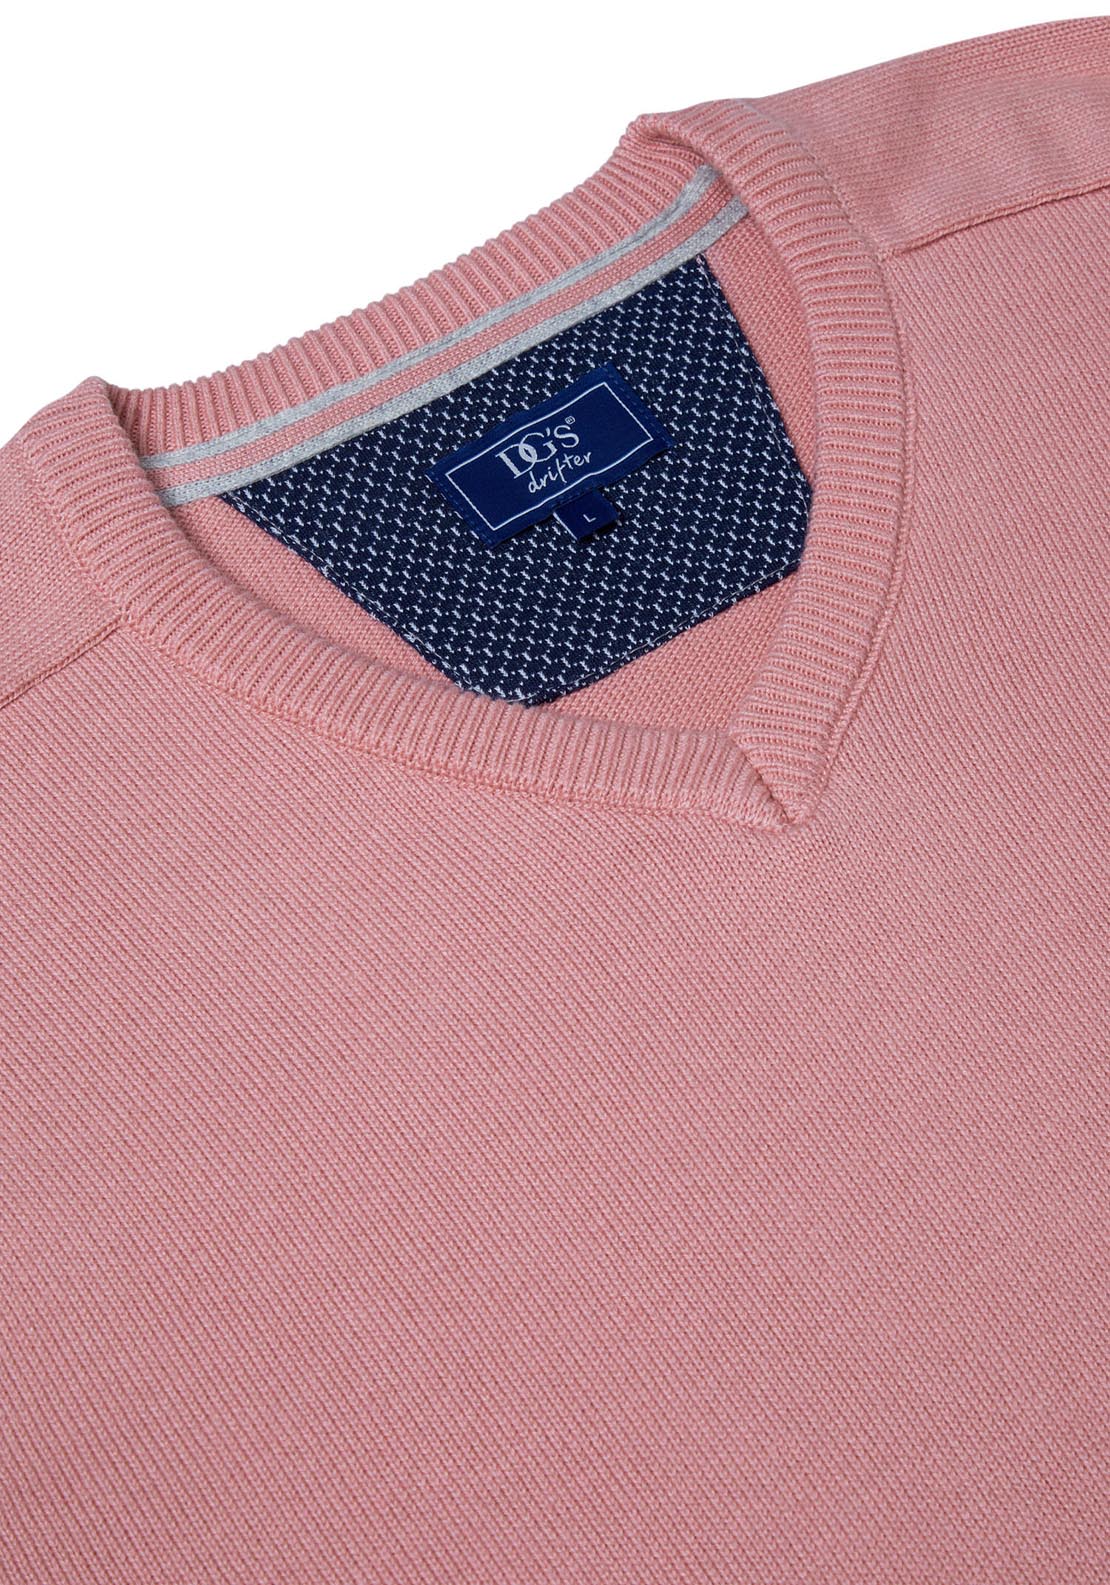 Drifter V Neck Cotton Knitwear - Pink 4 Shaws Department Stores